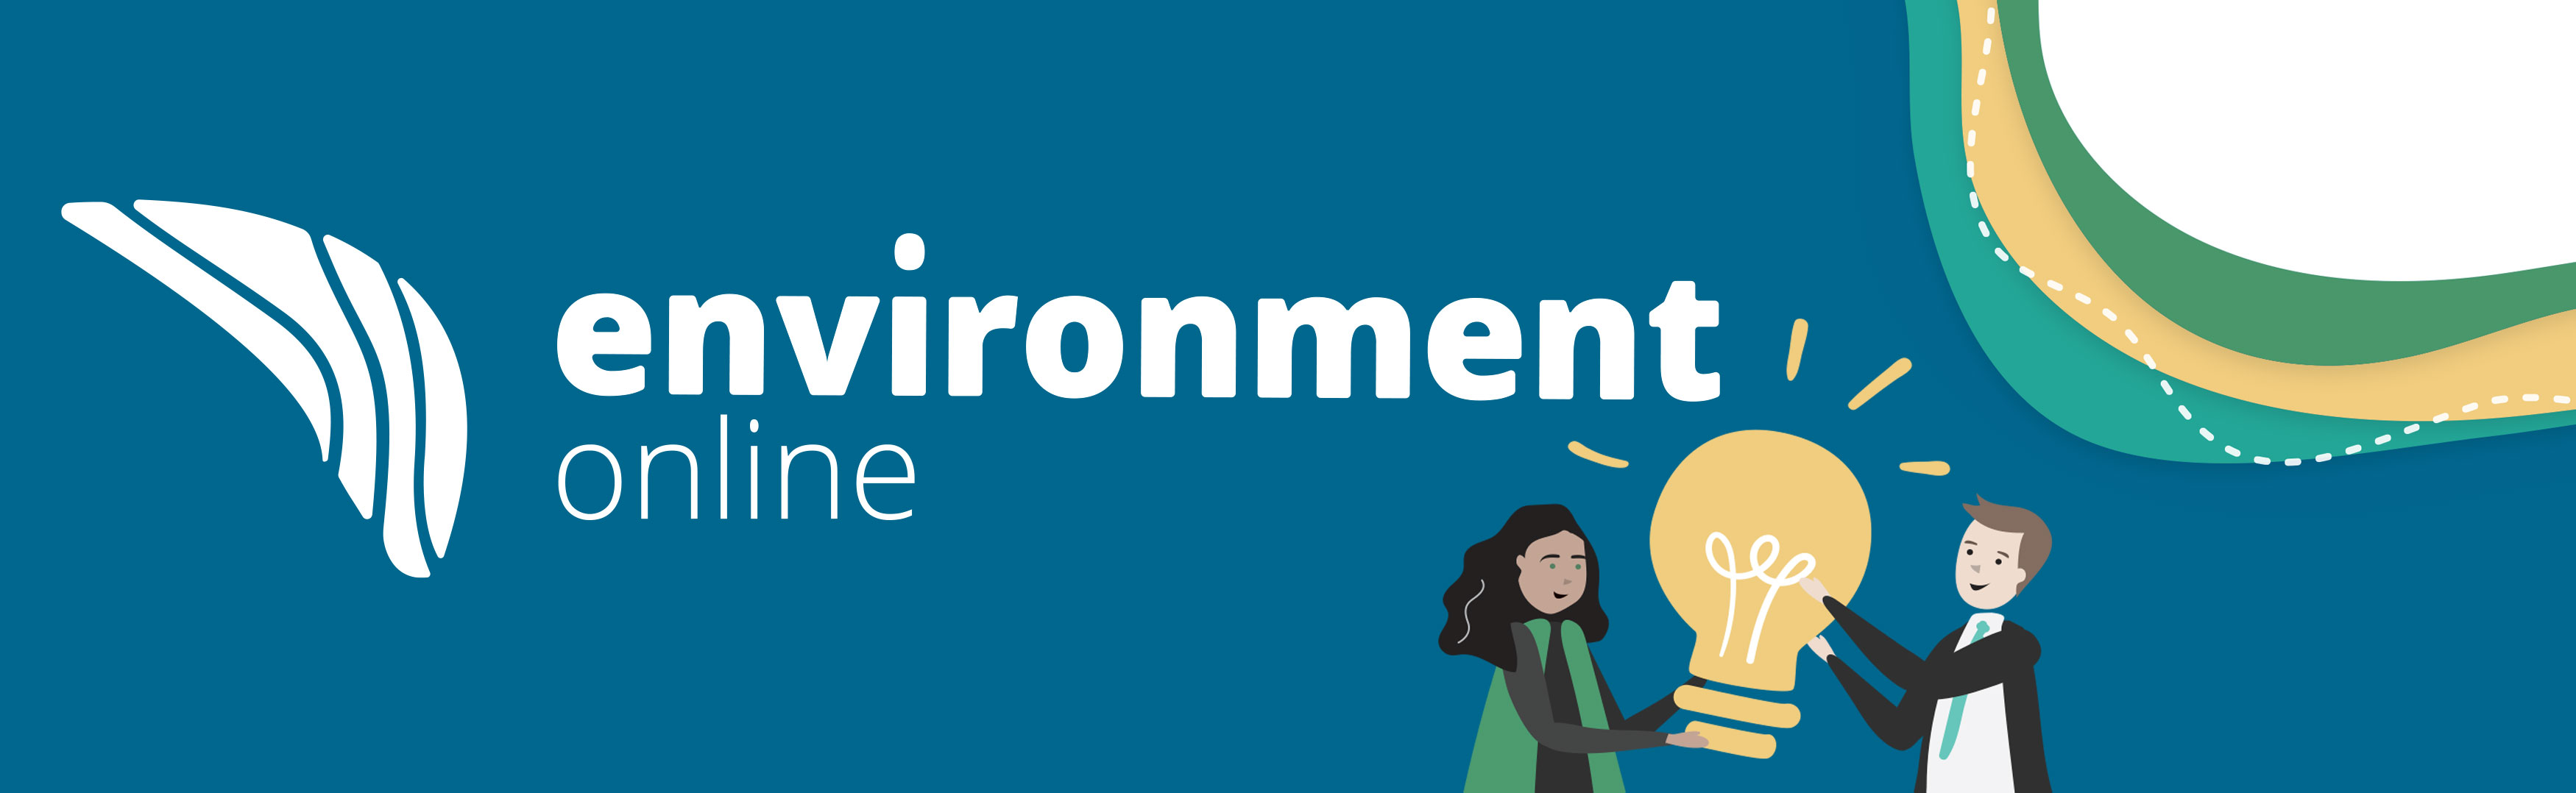 Environment Online banner